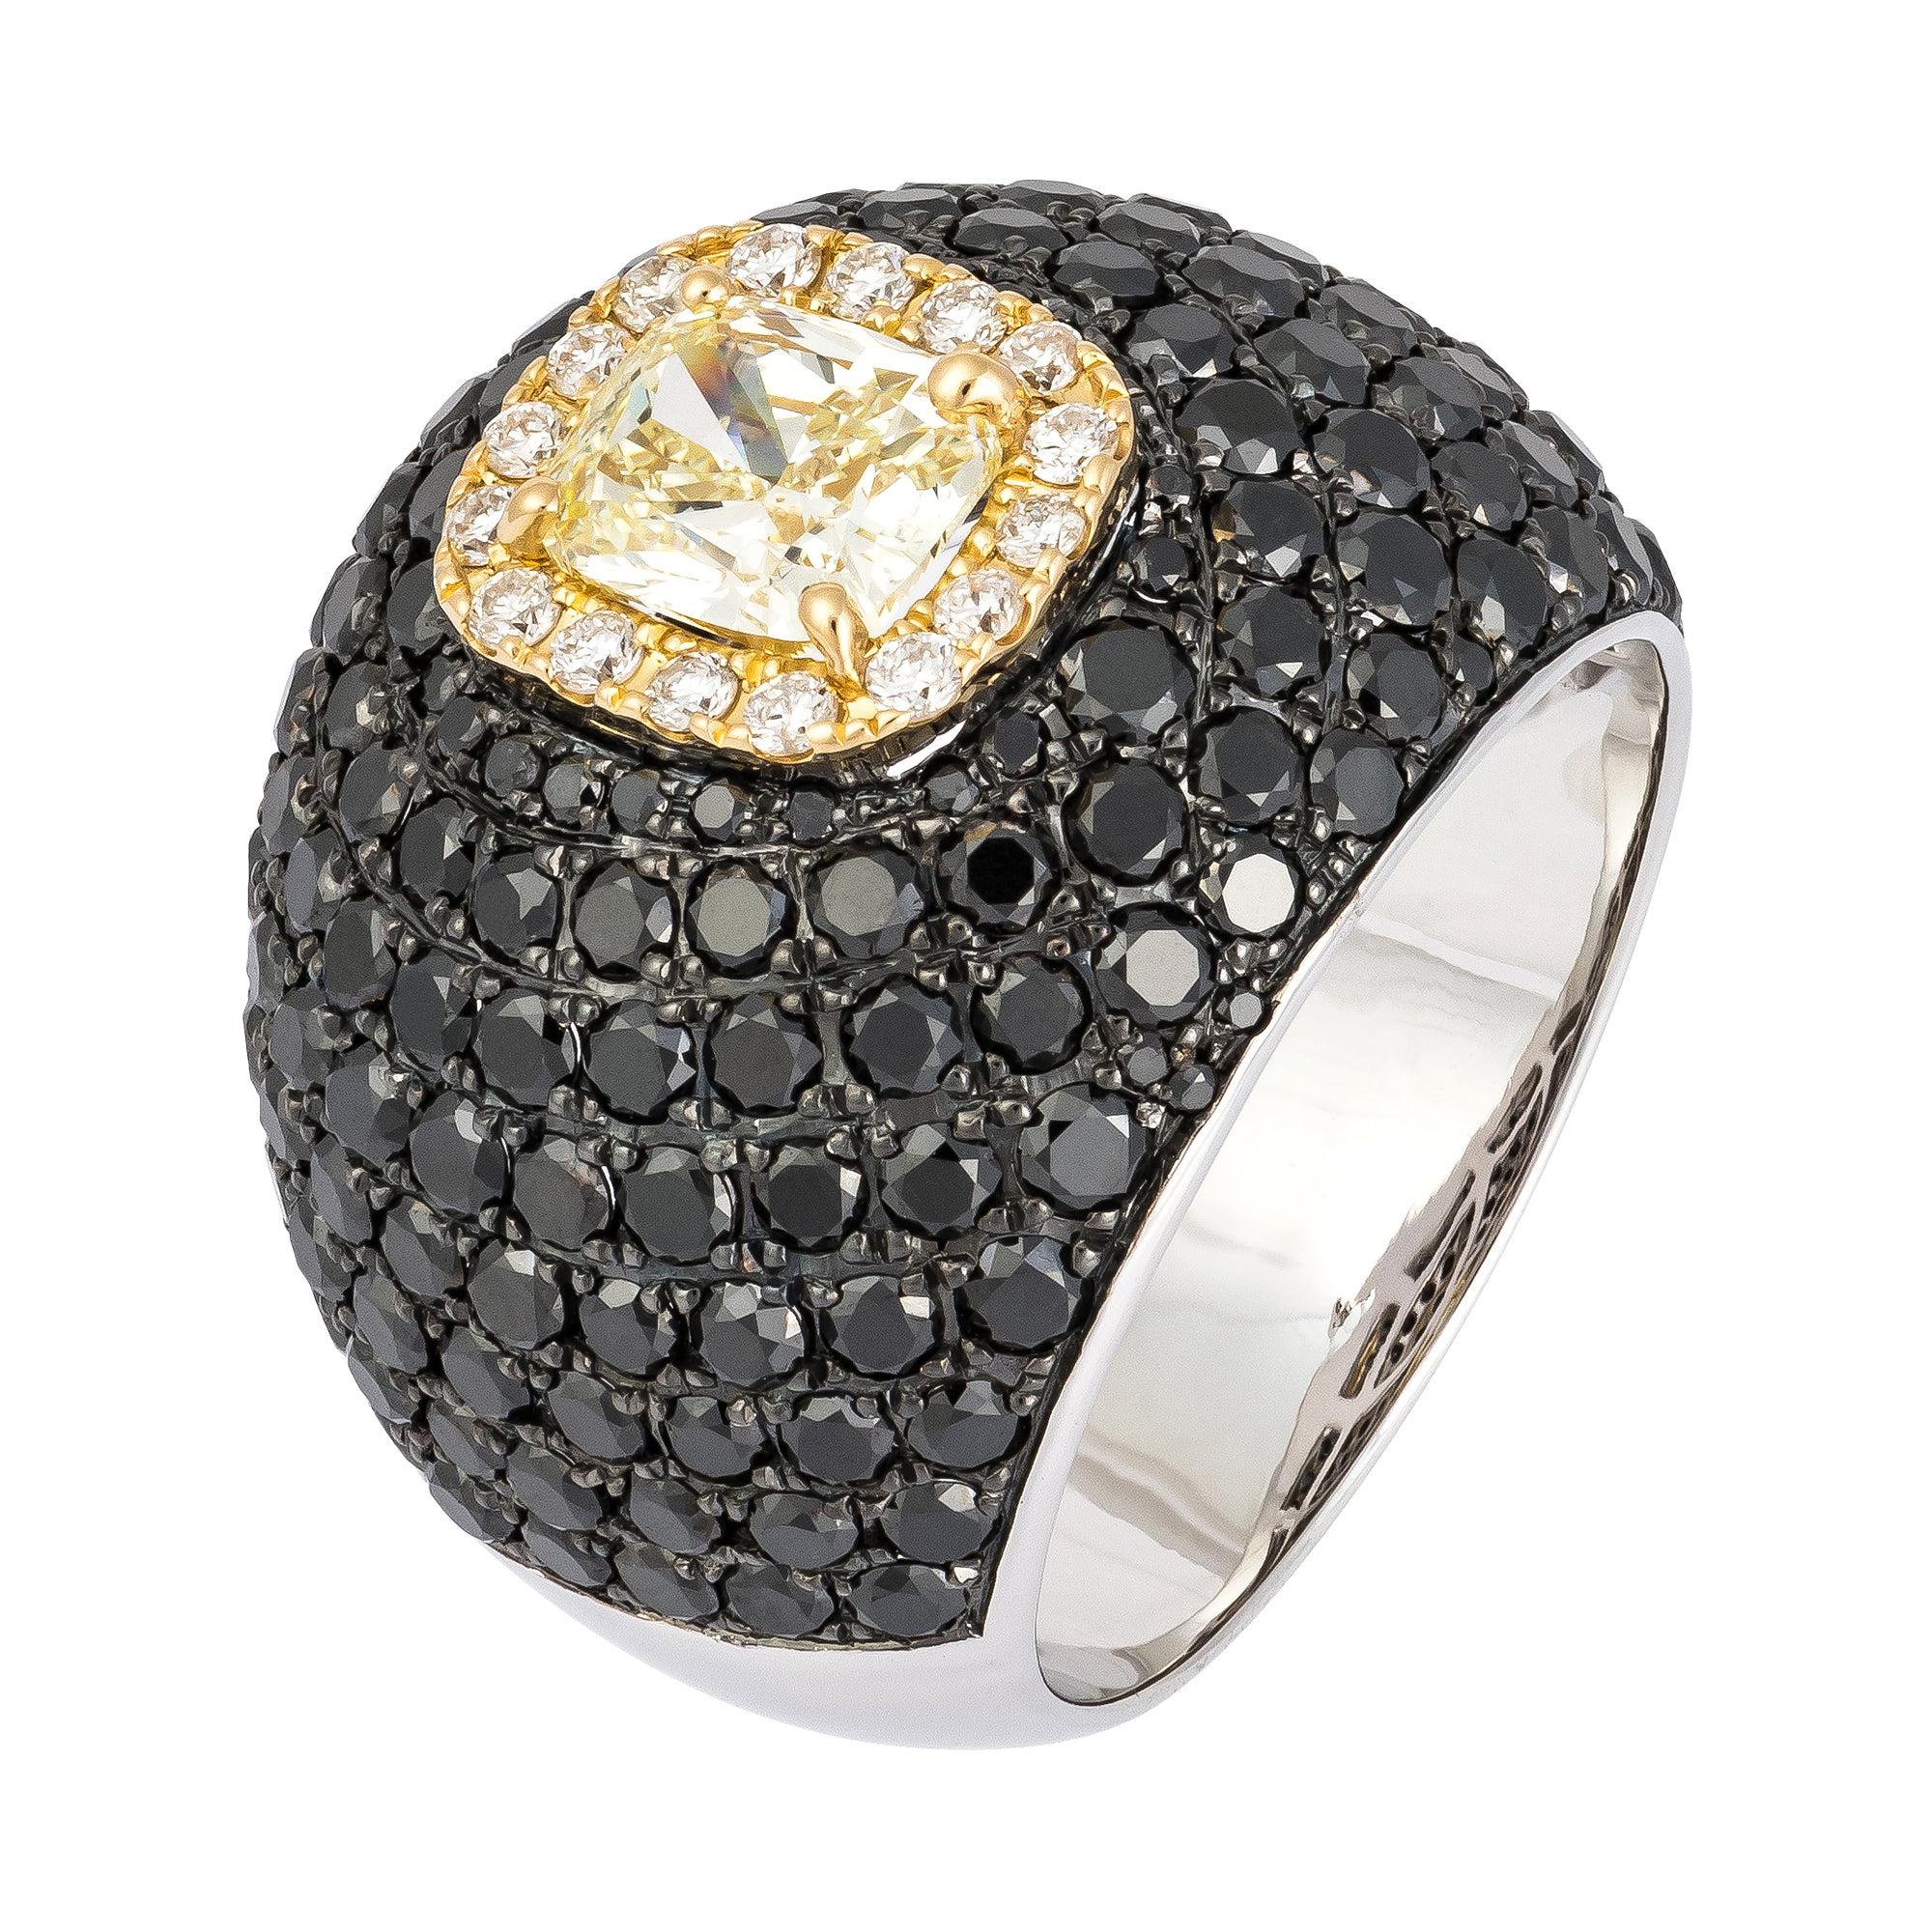 Italian Rare Black Yellow Diamond White Gold 18K Ring for Her